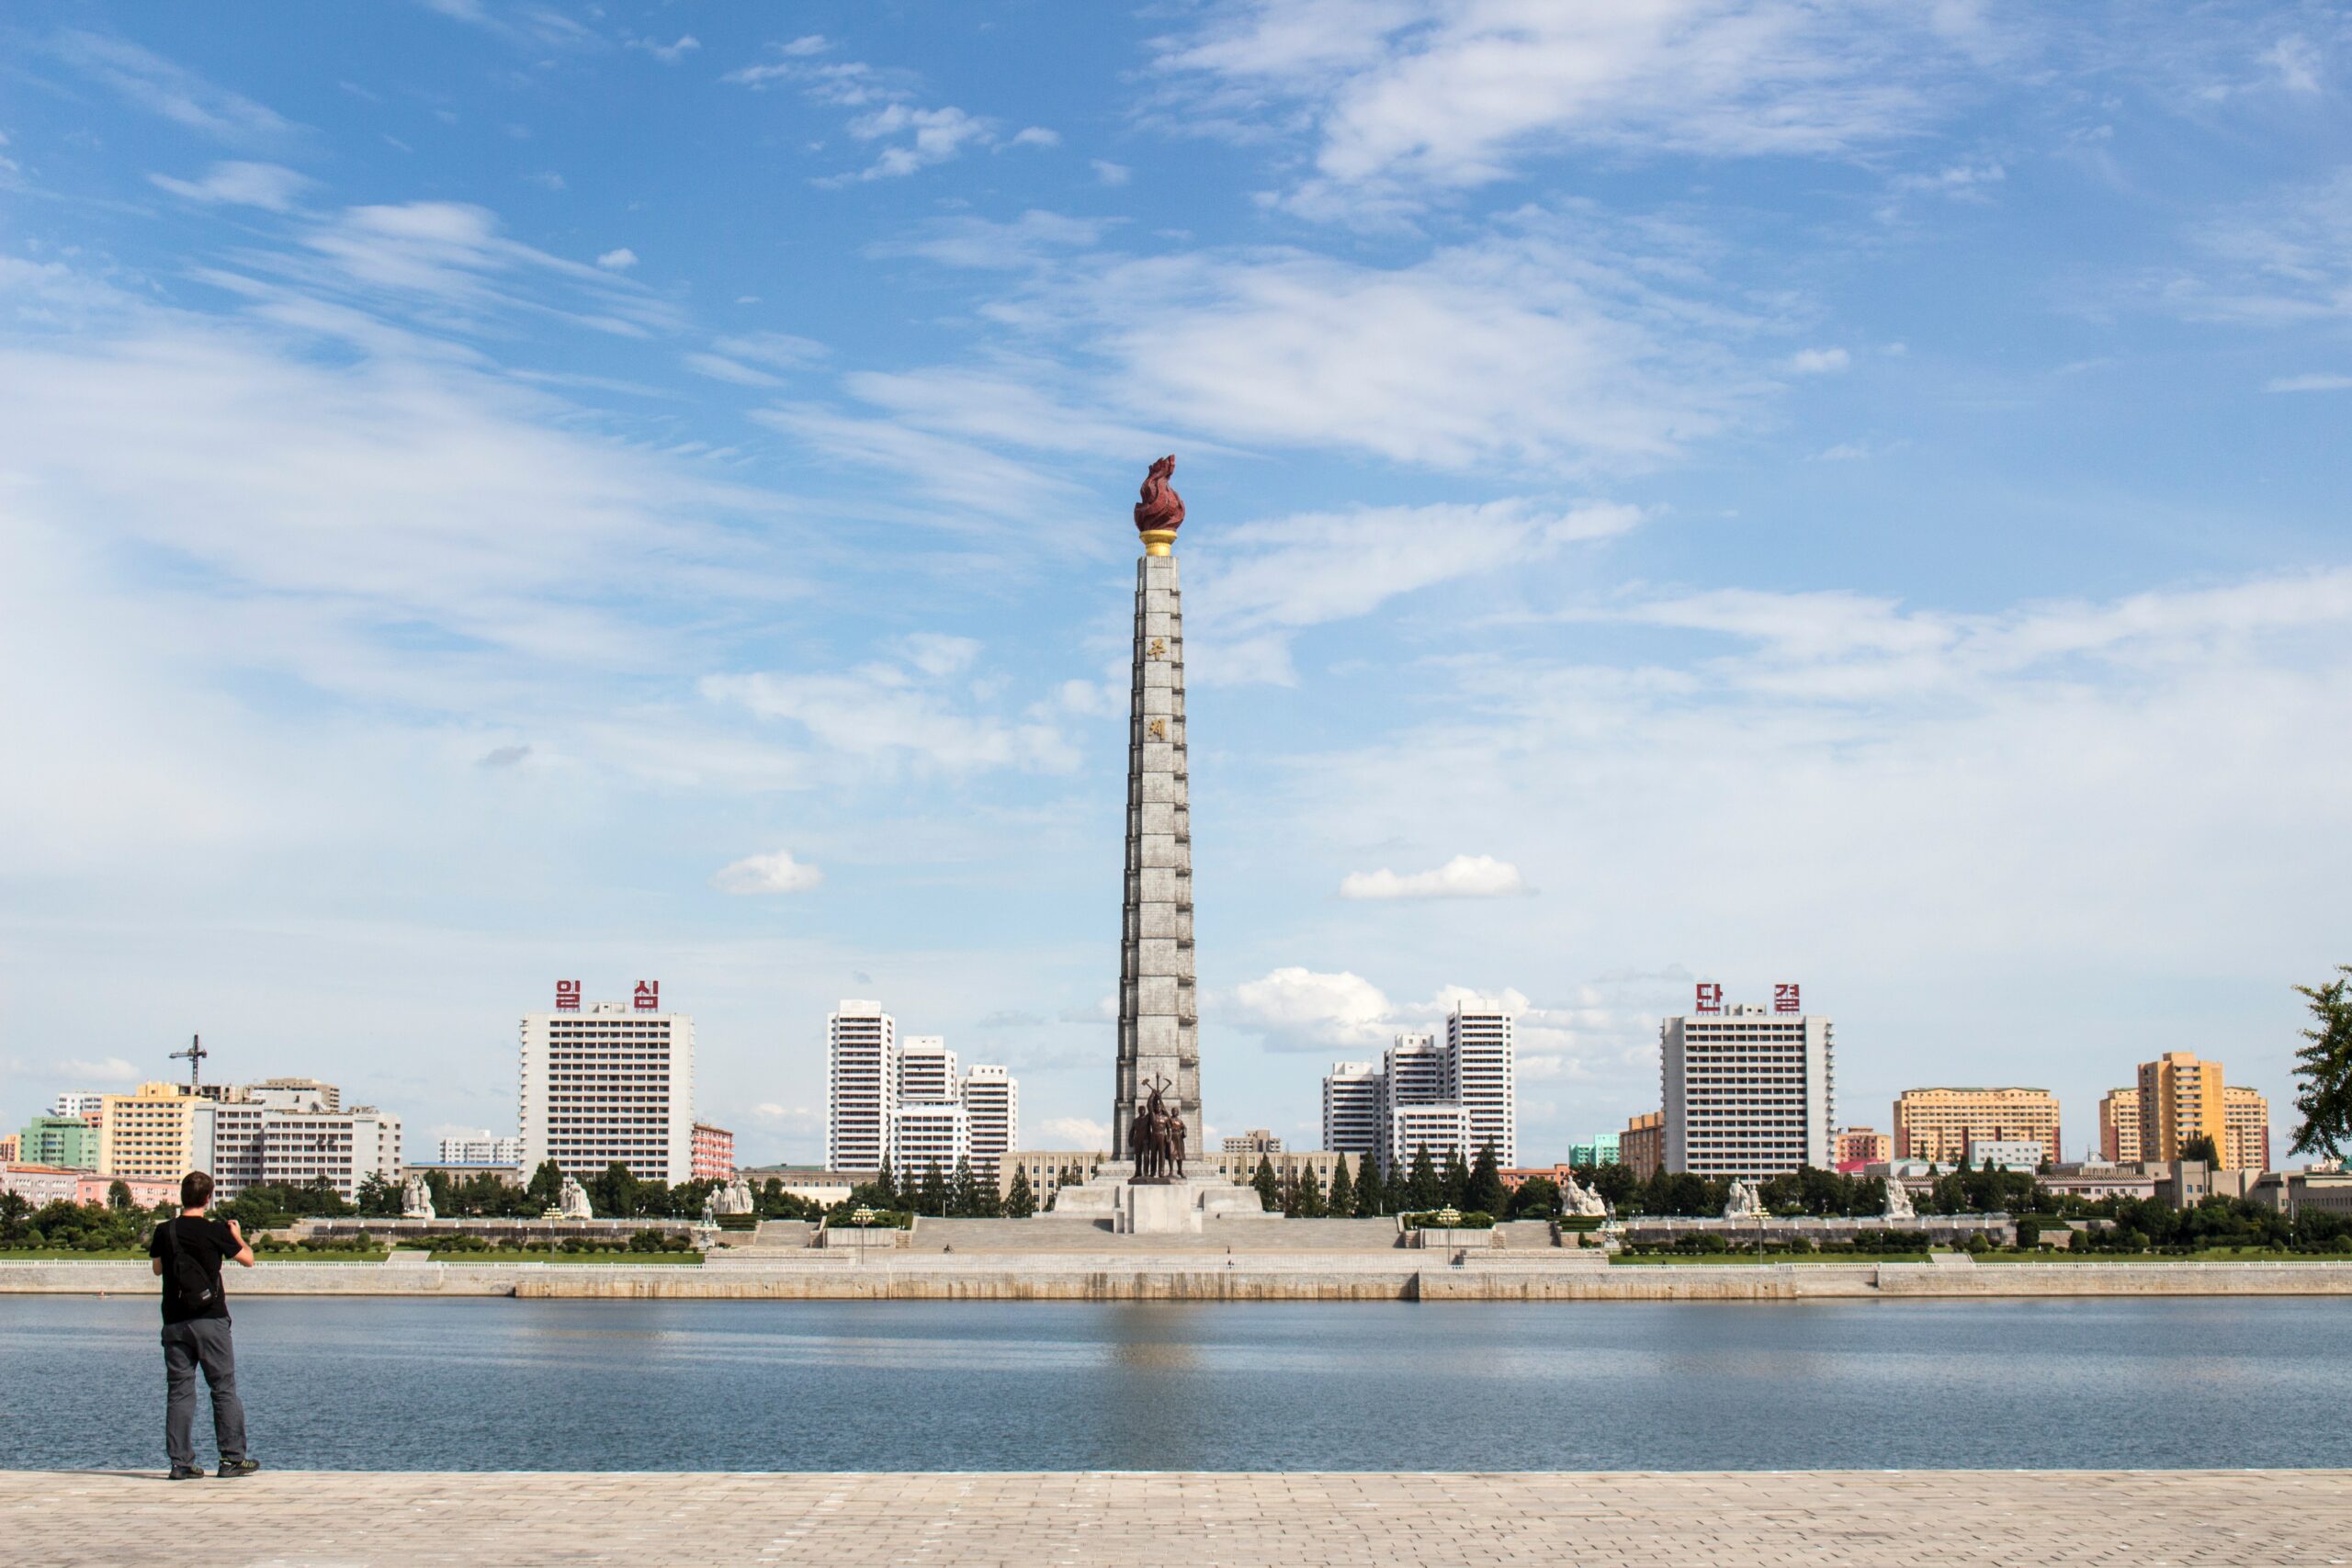 Visit North Korea as a tourist